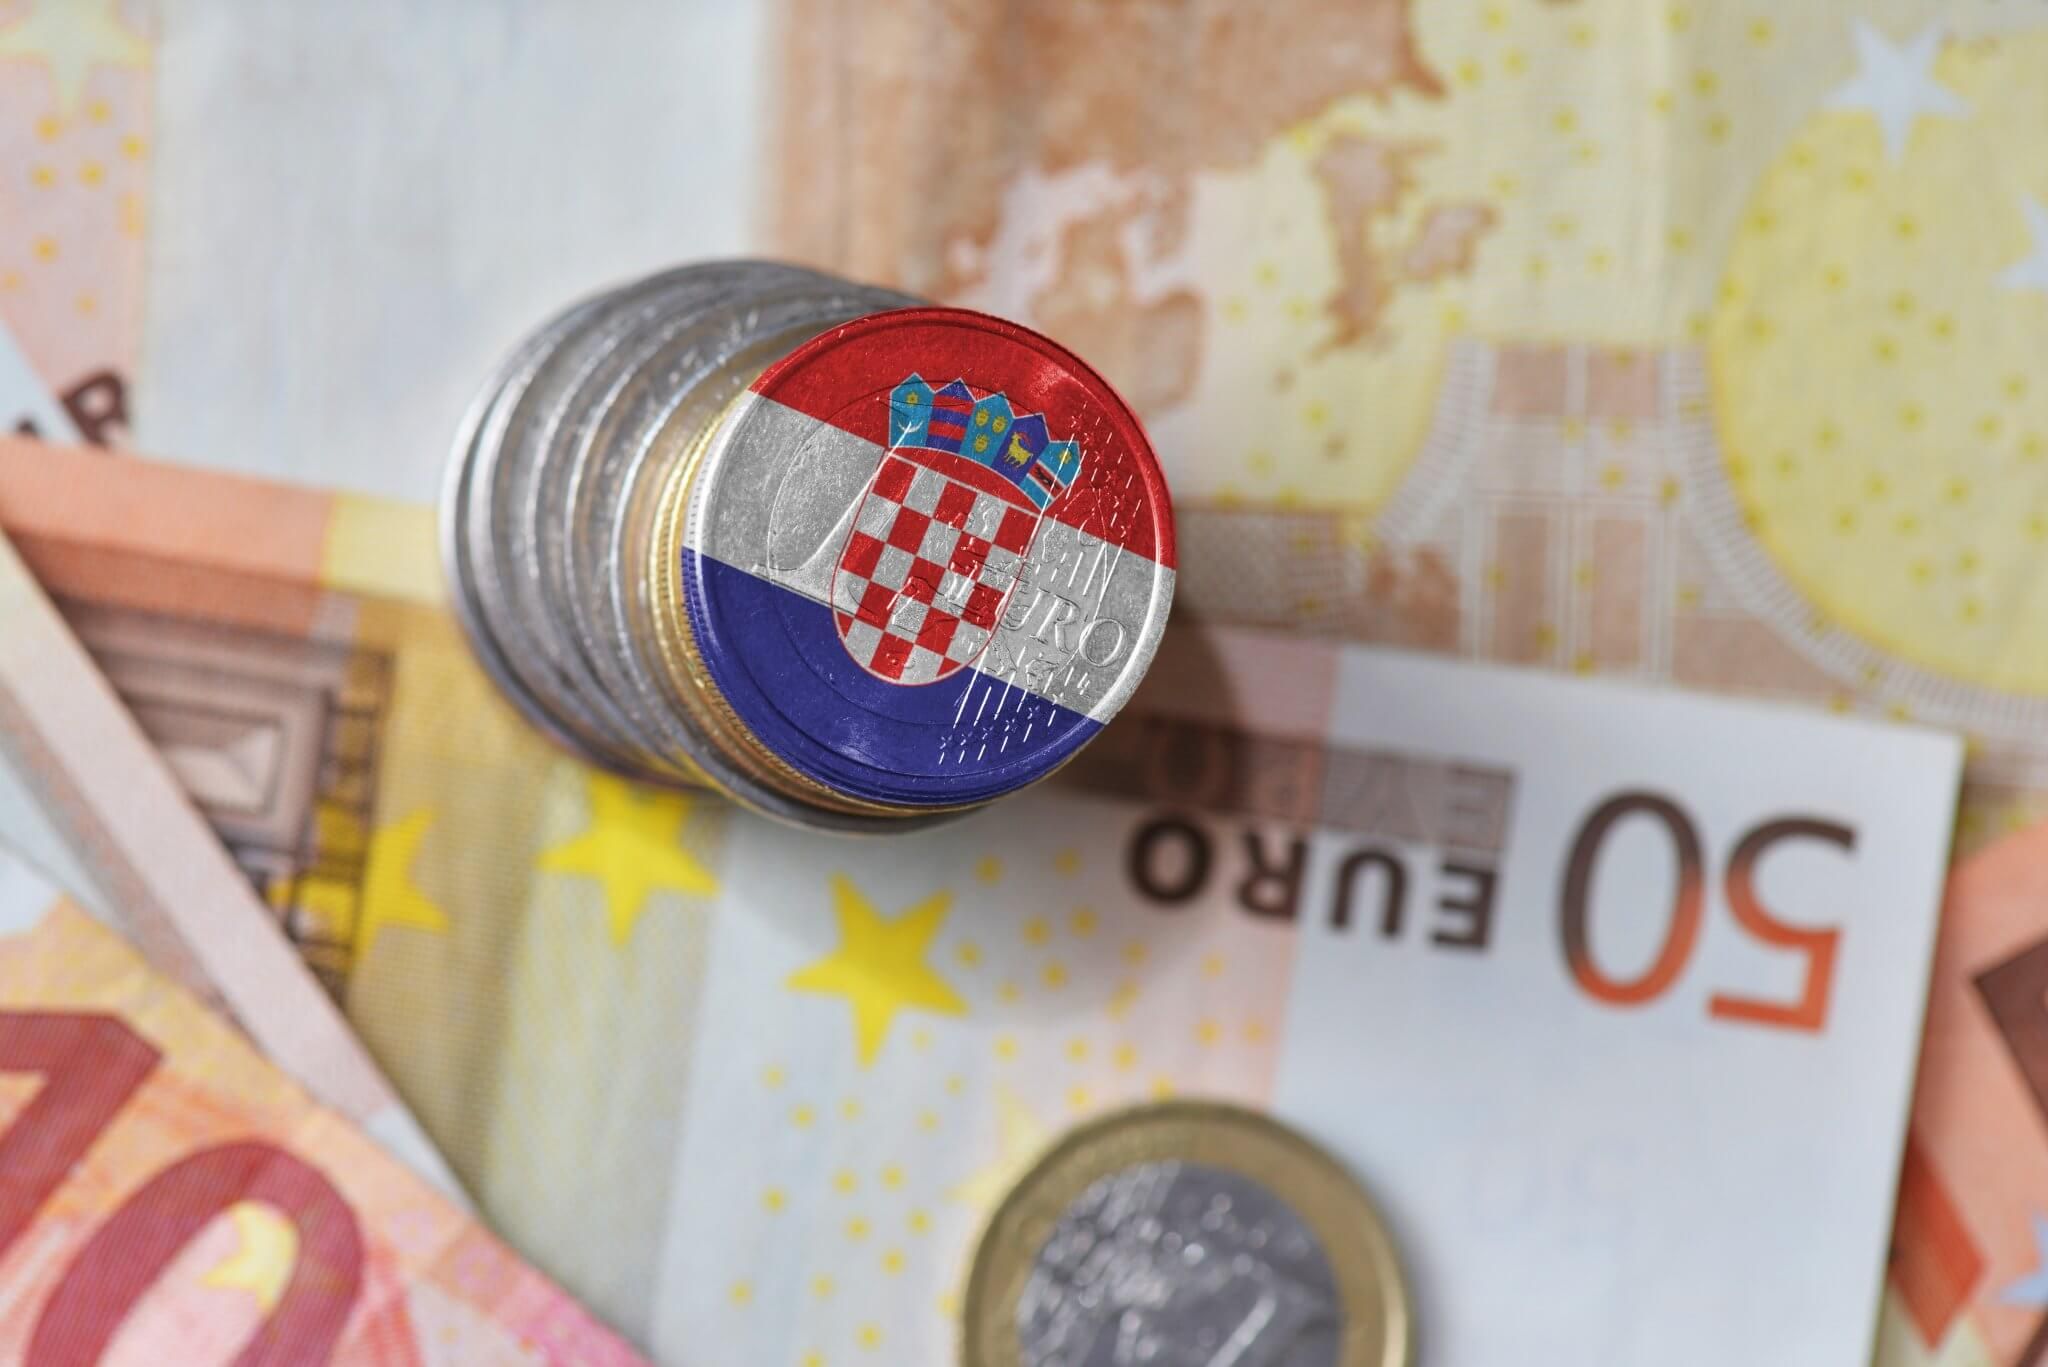 Euro-Einführung in Kroatien